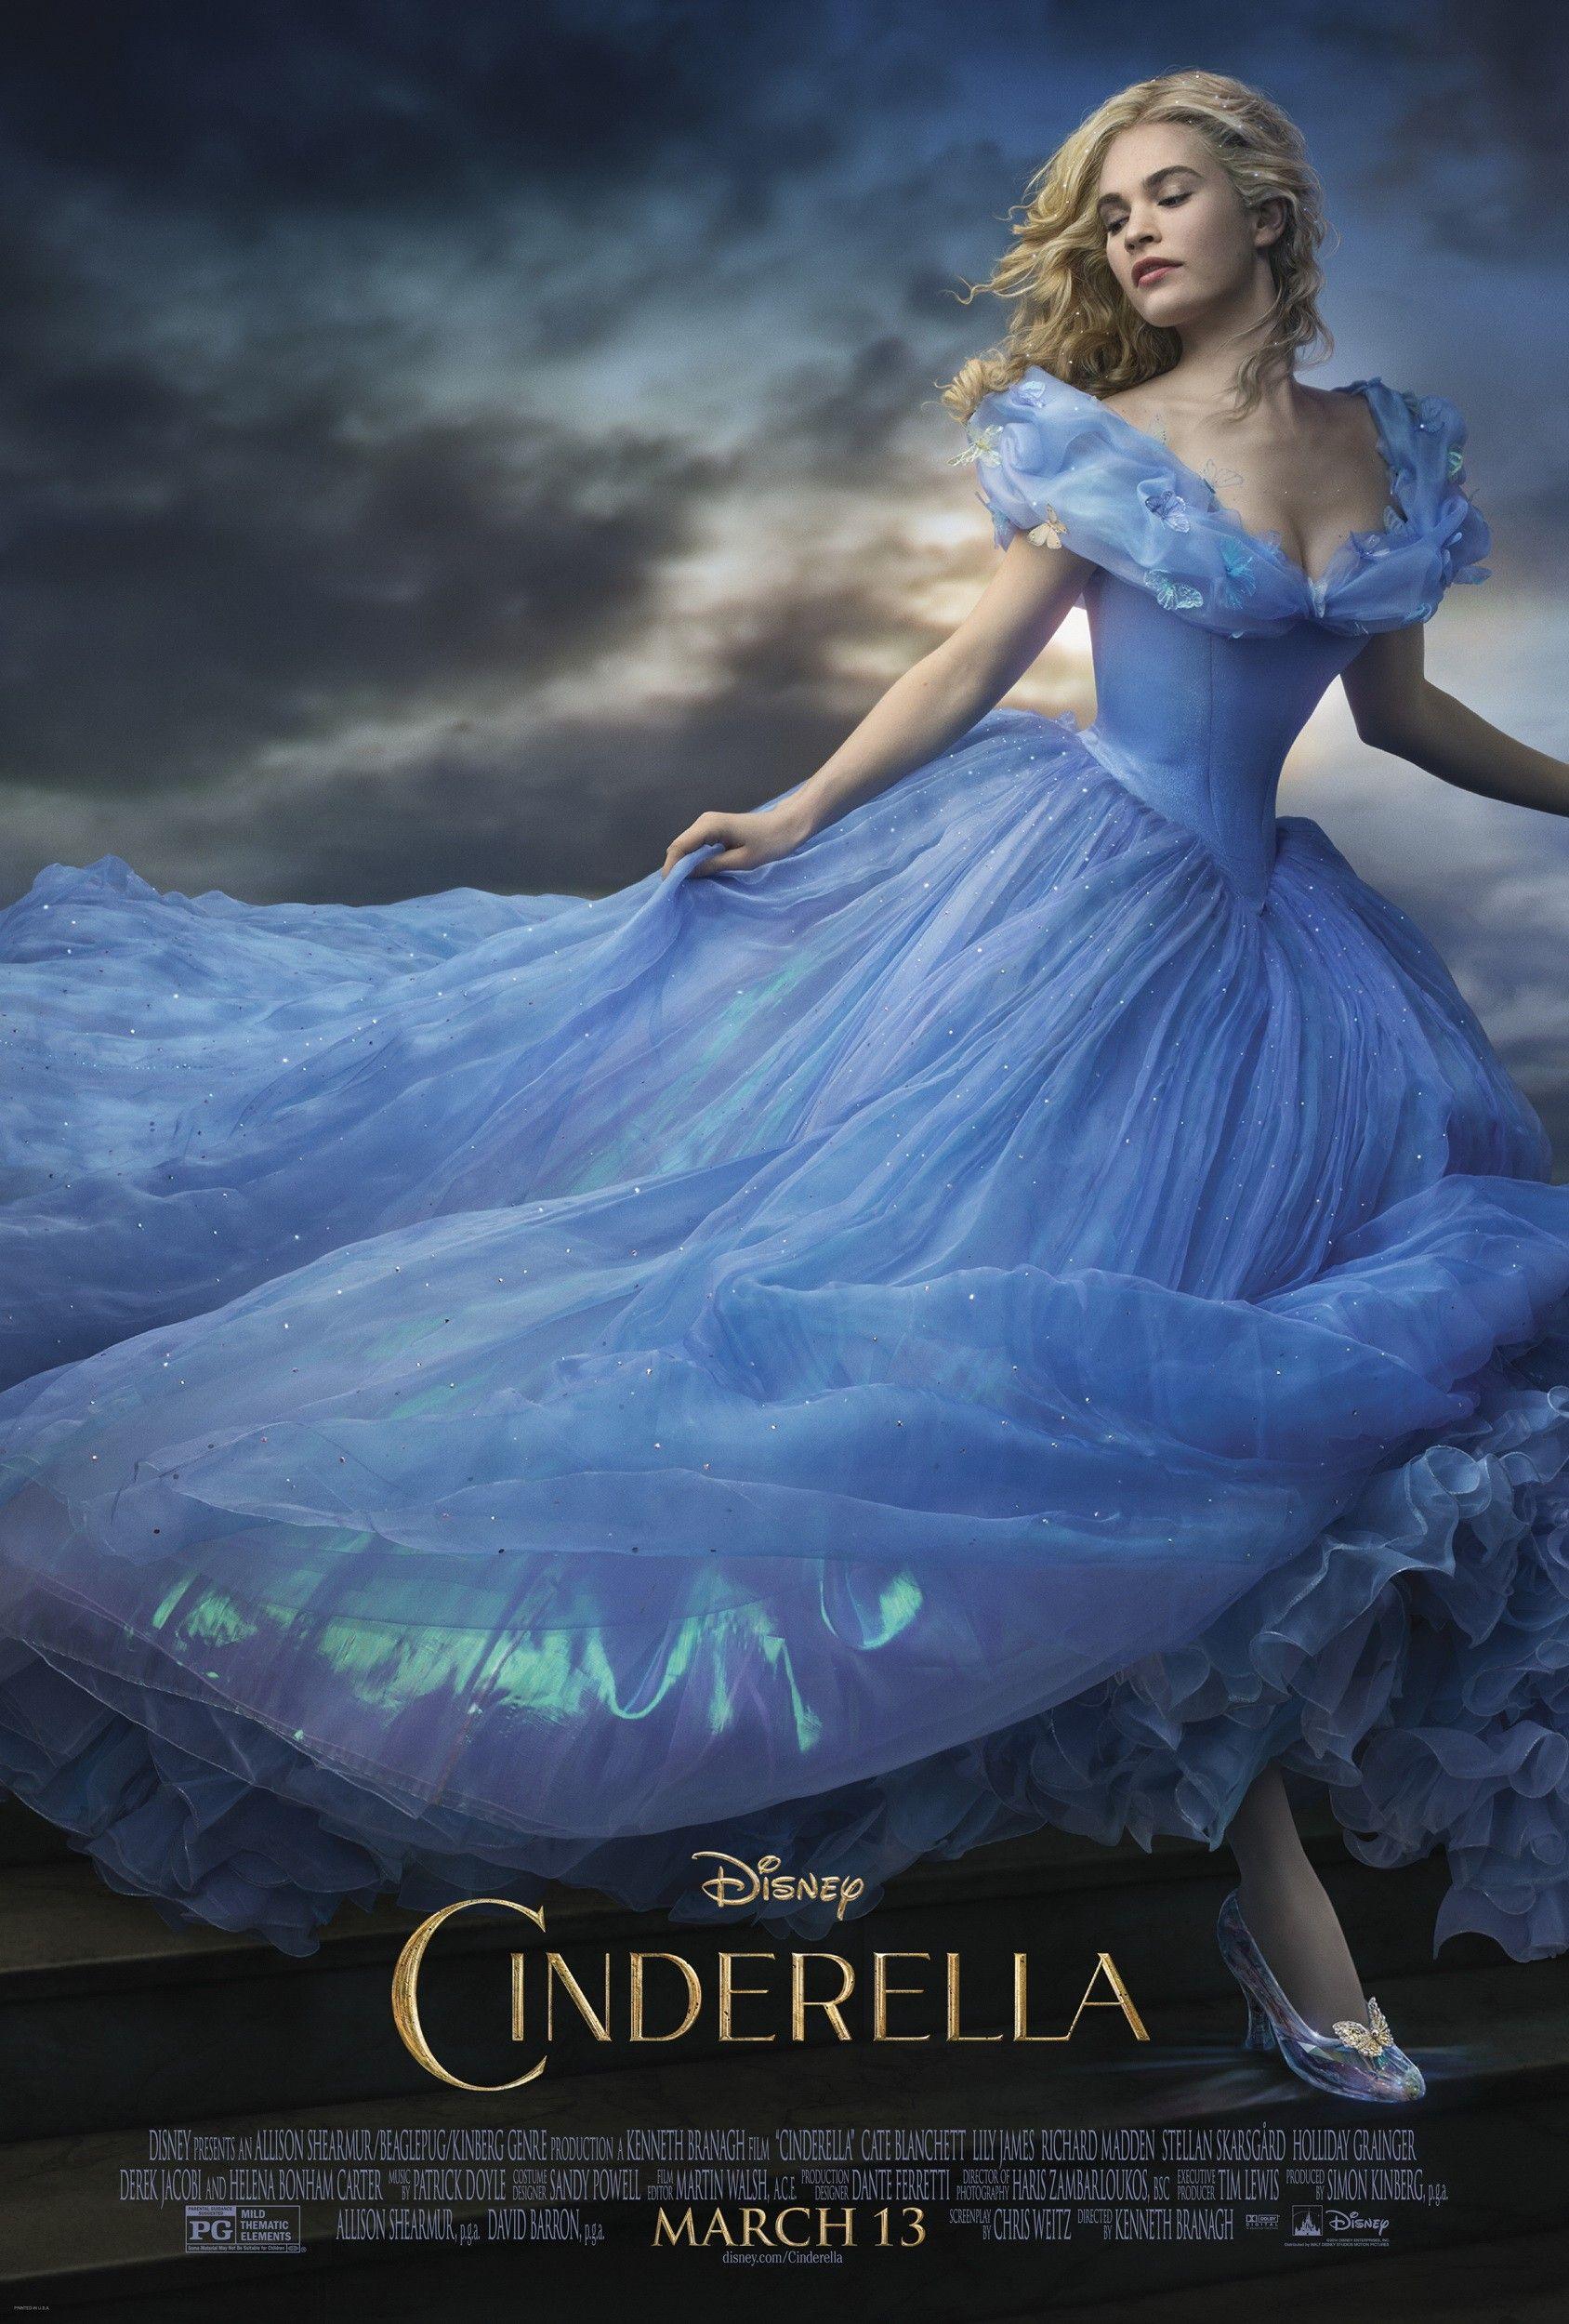 Cinderella Upcoming Movies. Movie Database. JoBlo.com